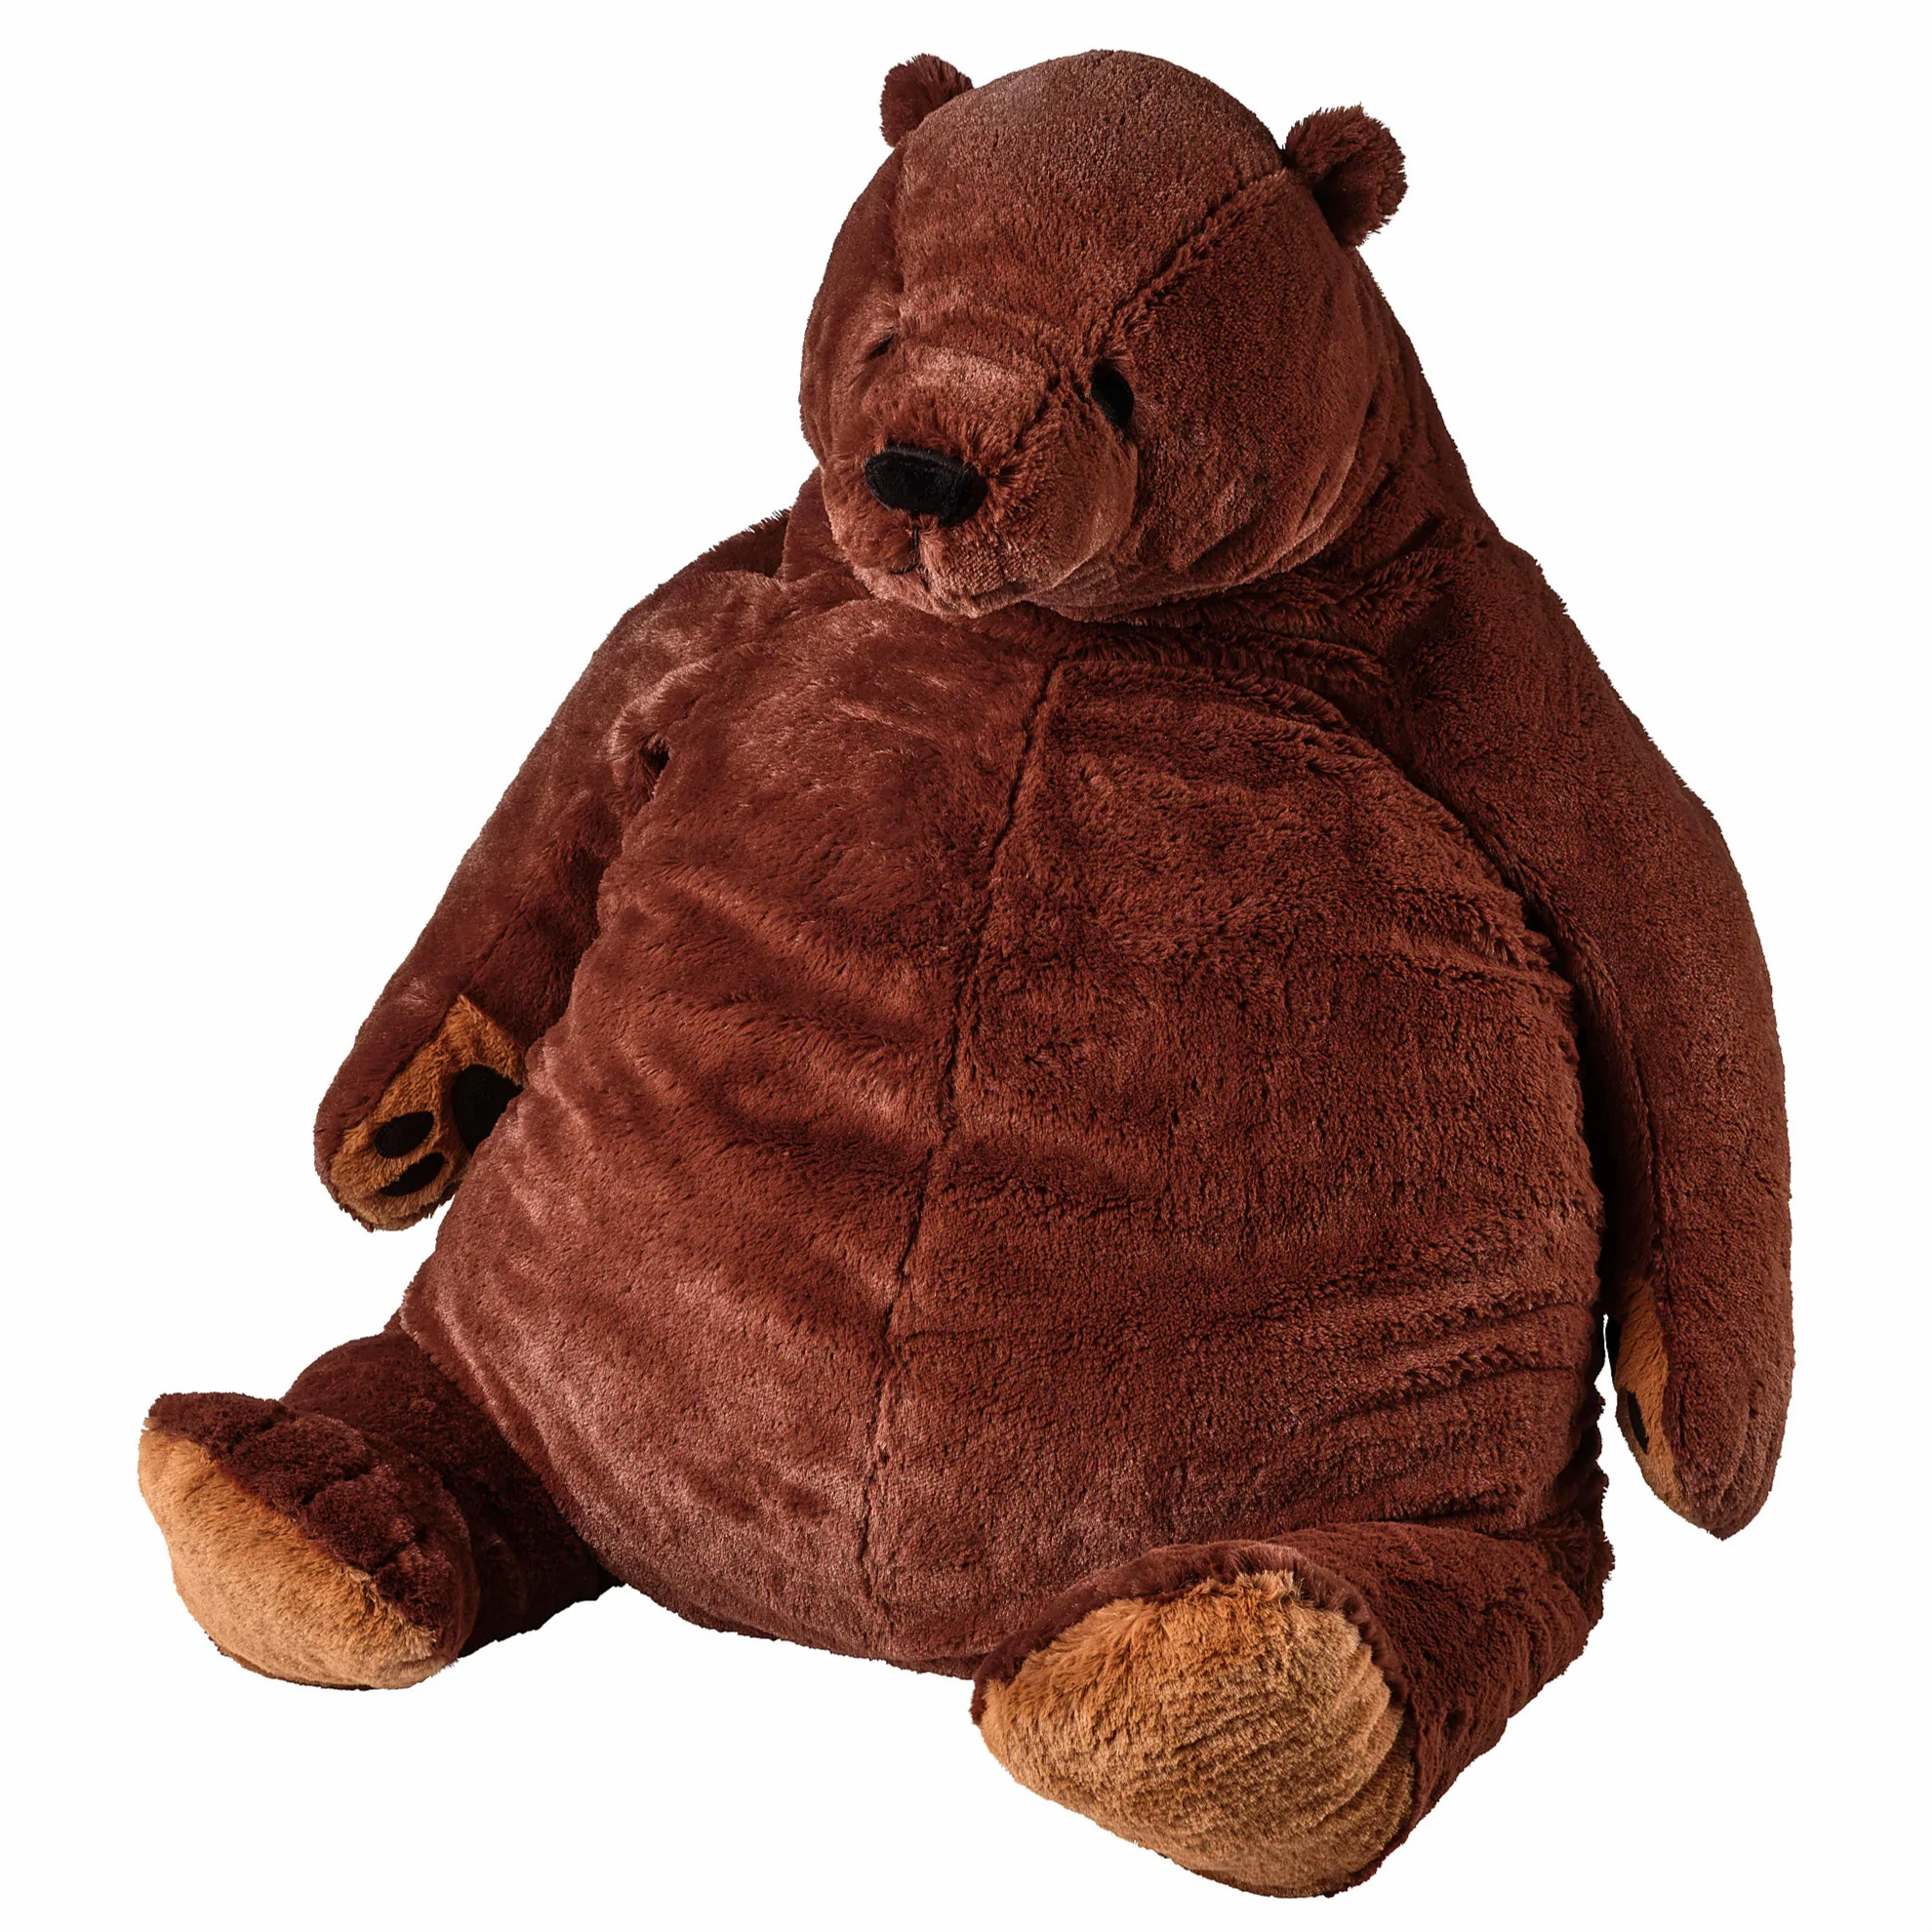 Brown Plush Teddy Bear Stuffed Animal Toy Gift New